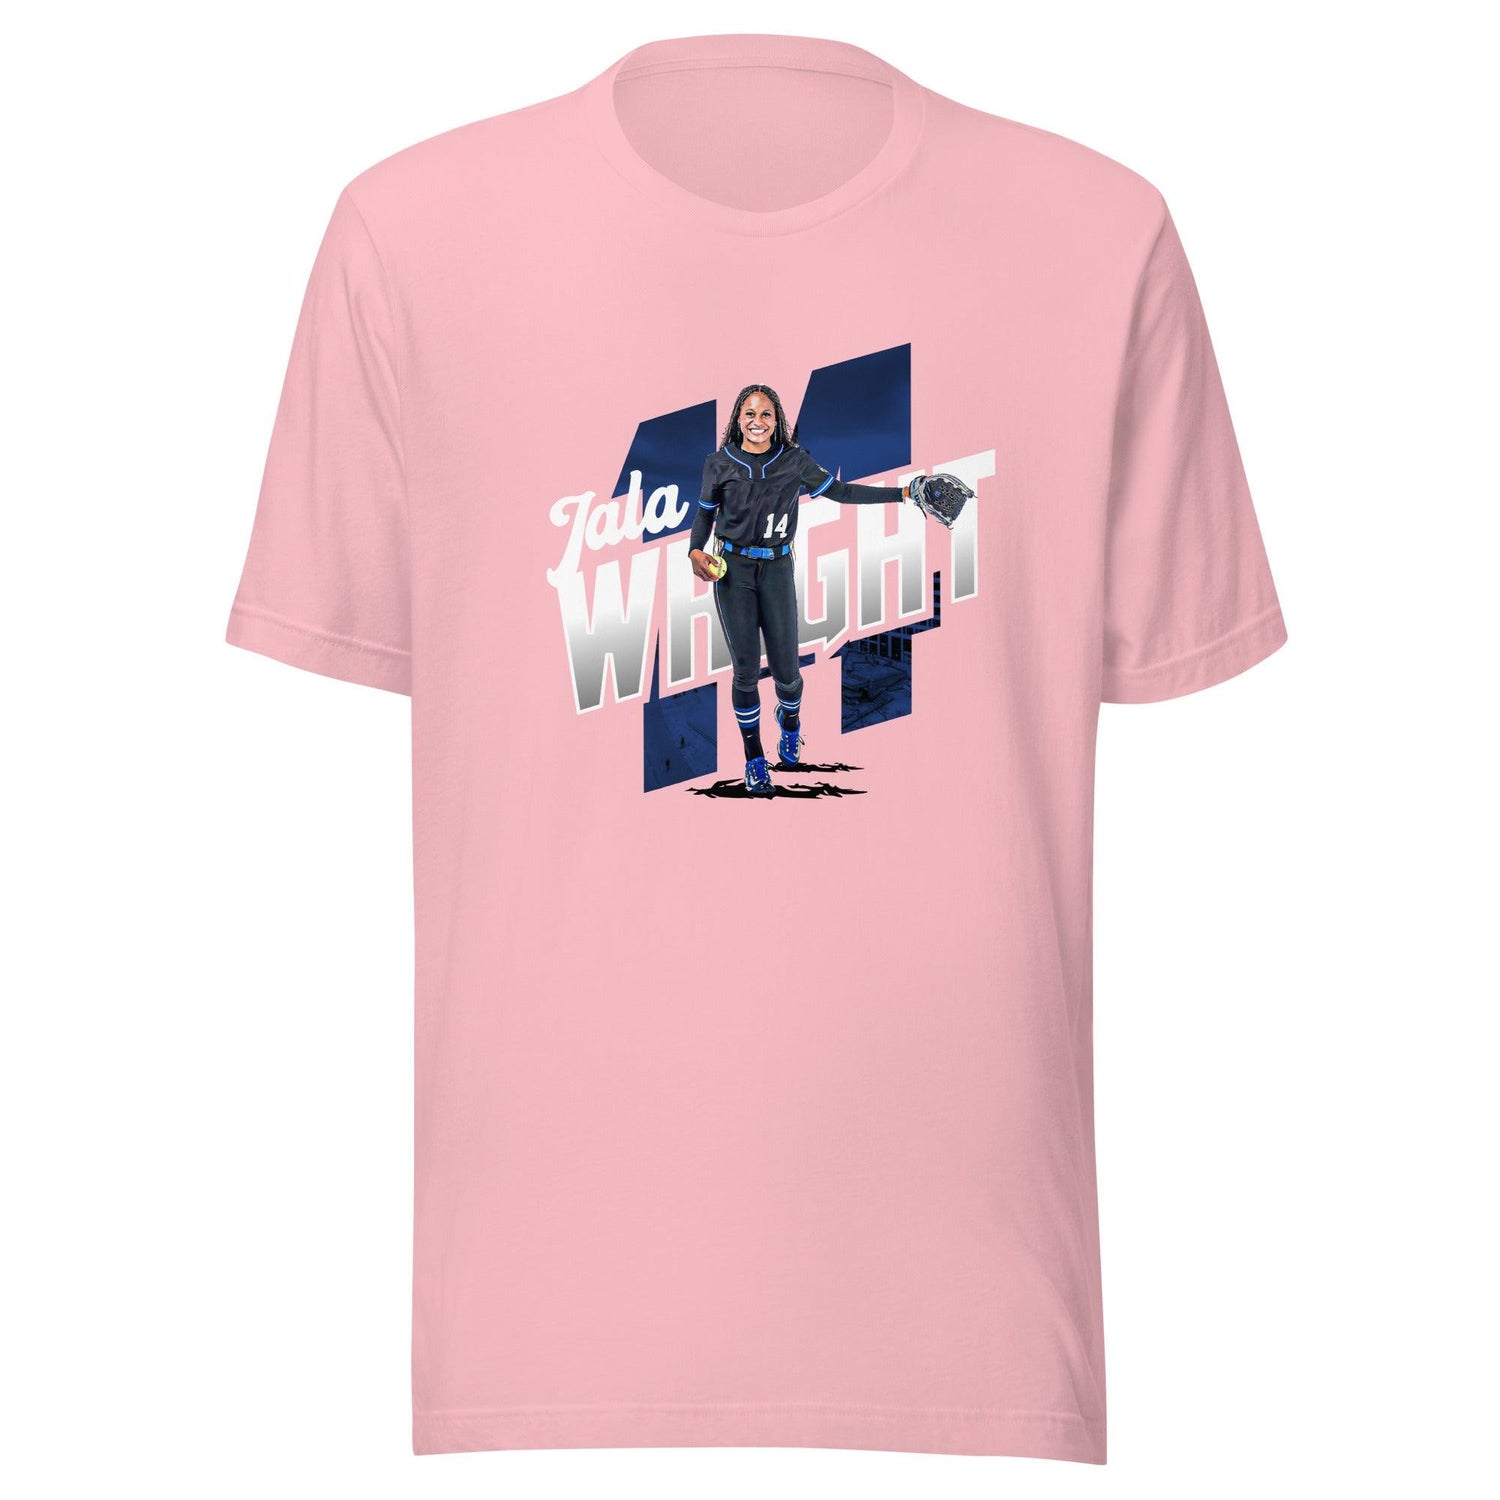 Jala Wright "Gameday" t-shirt - Fan Arch